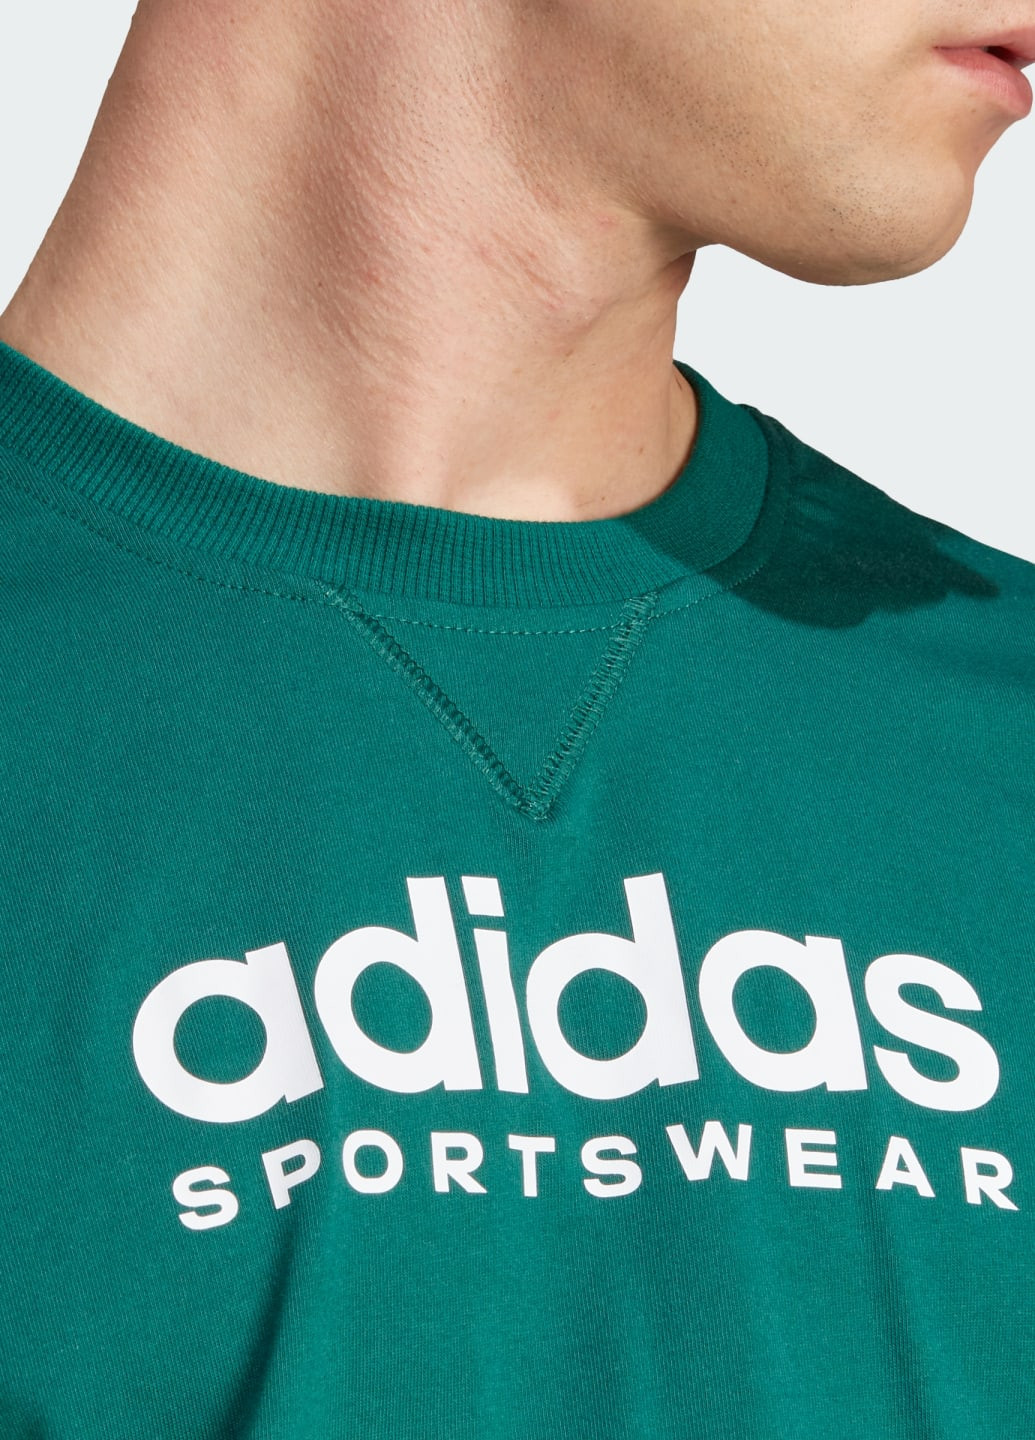 Зелена футболка з принтом all szn adidas